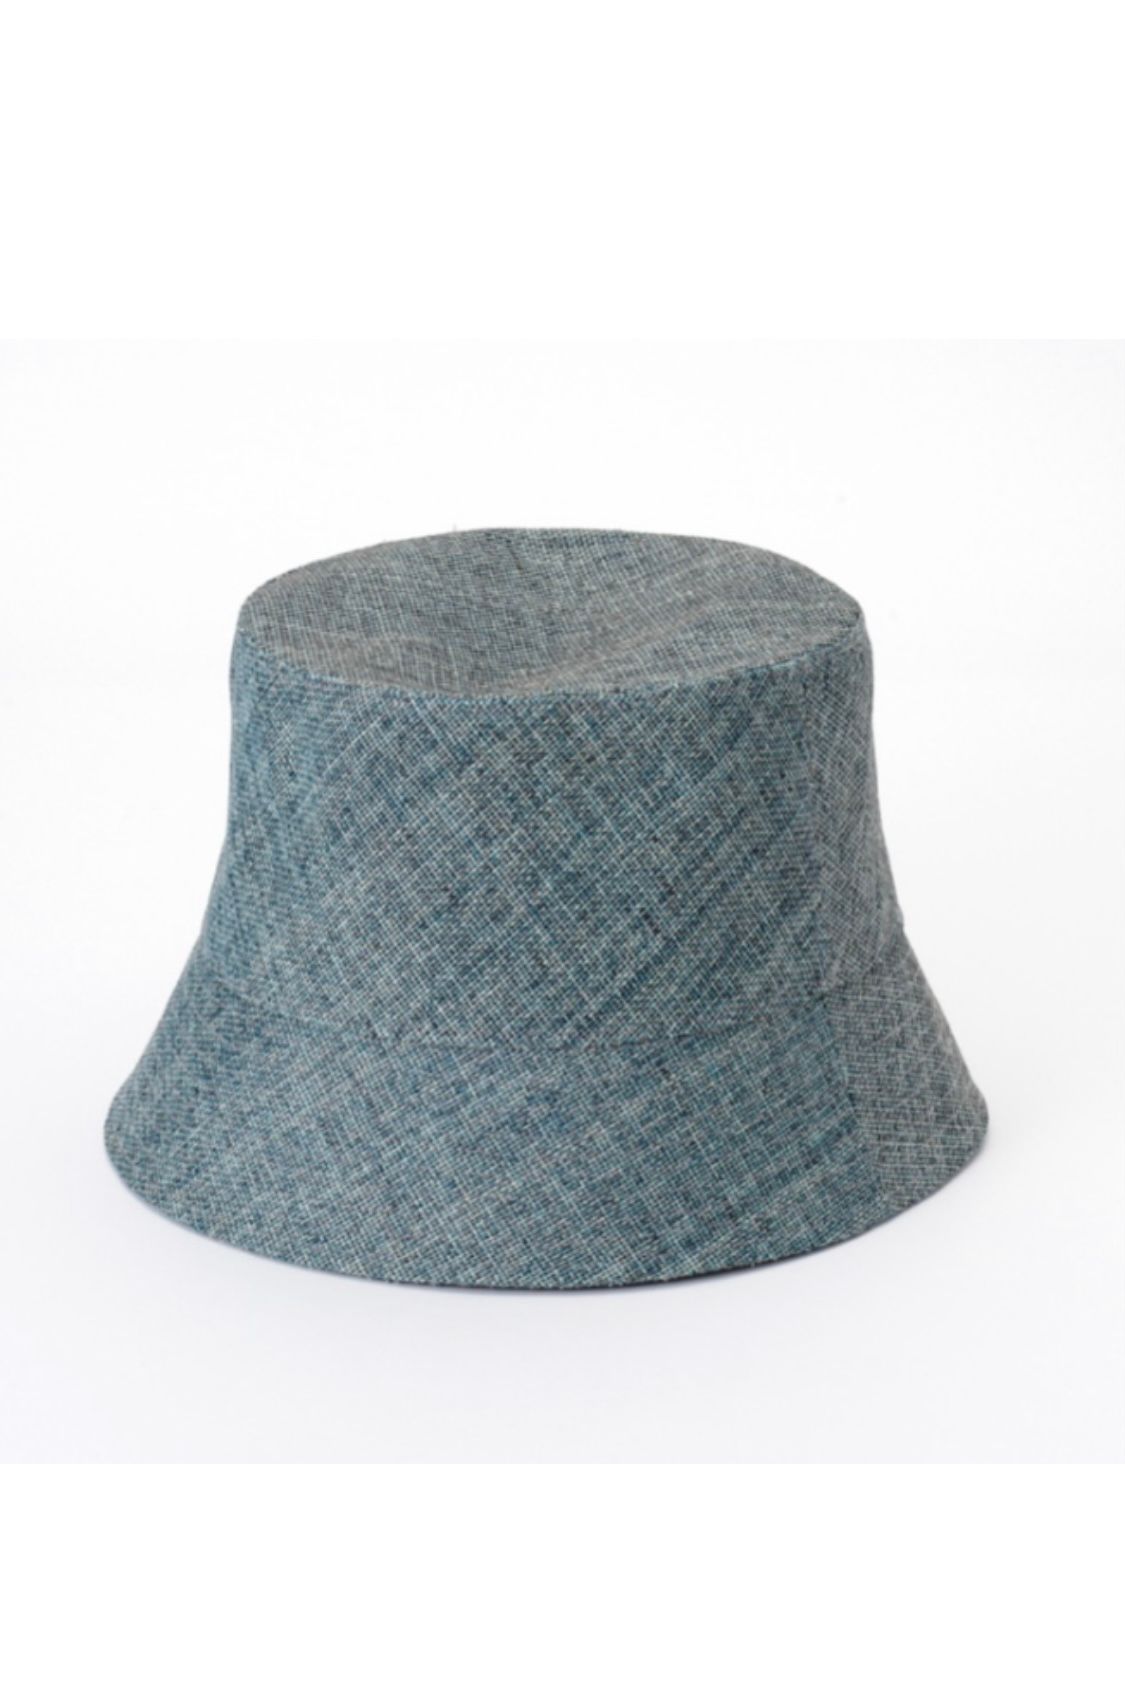 KIJIMA TAKAYUKI - PAPER CLOTH BUCKET HAT -blue- 23ss 